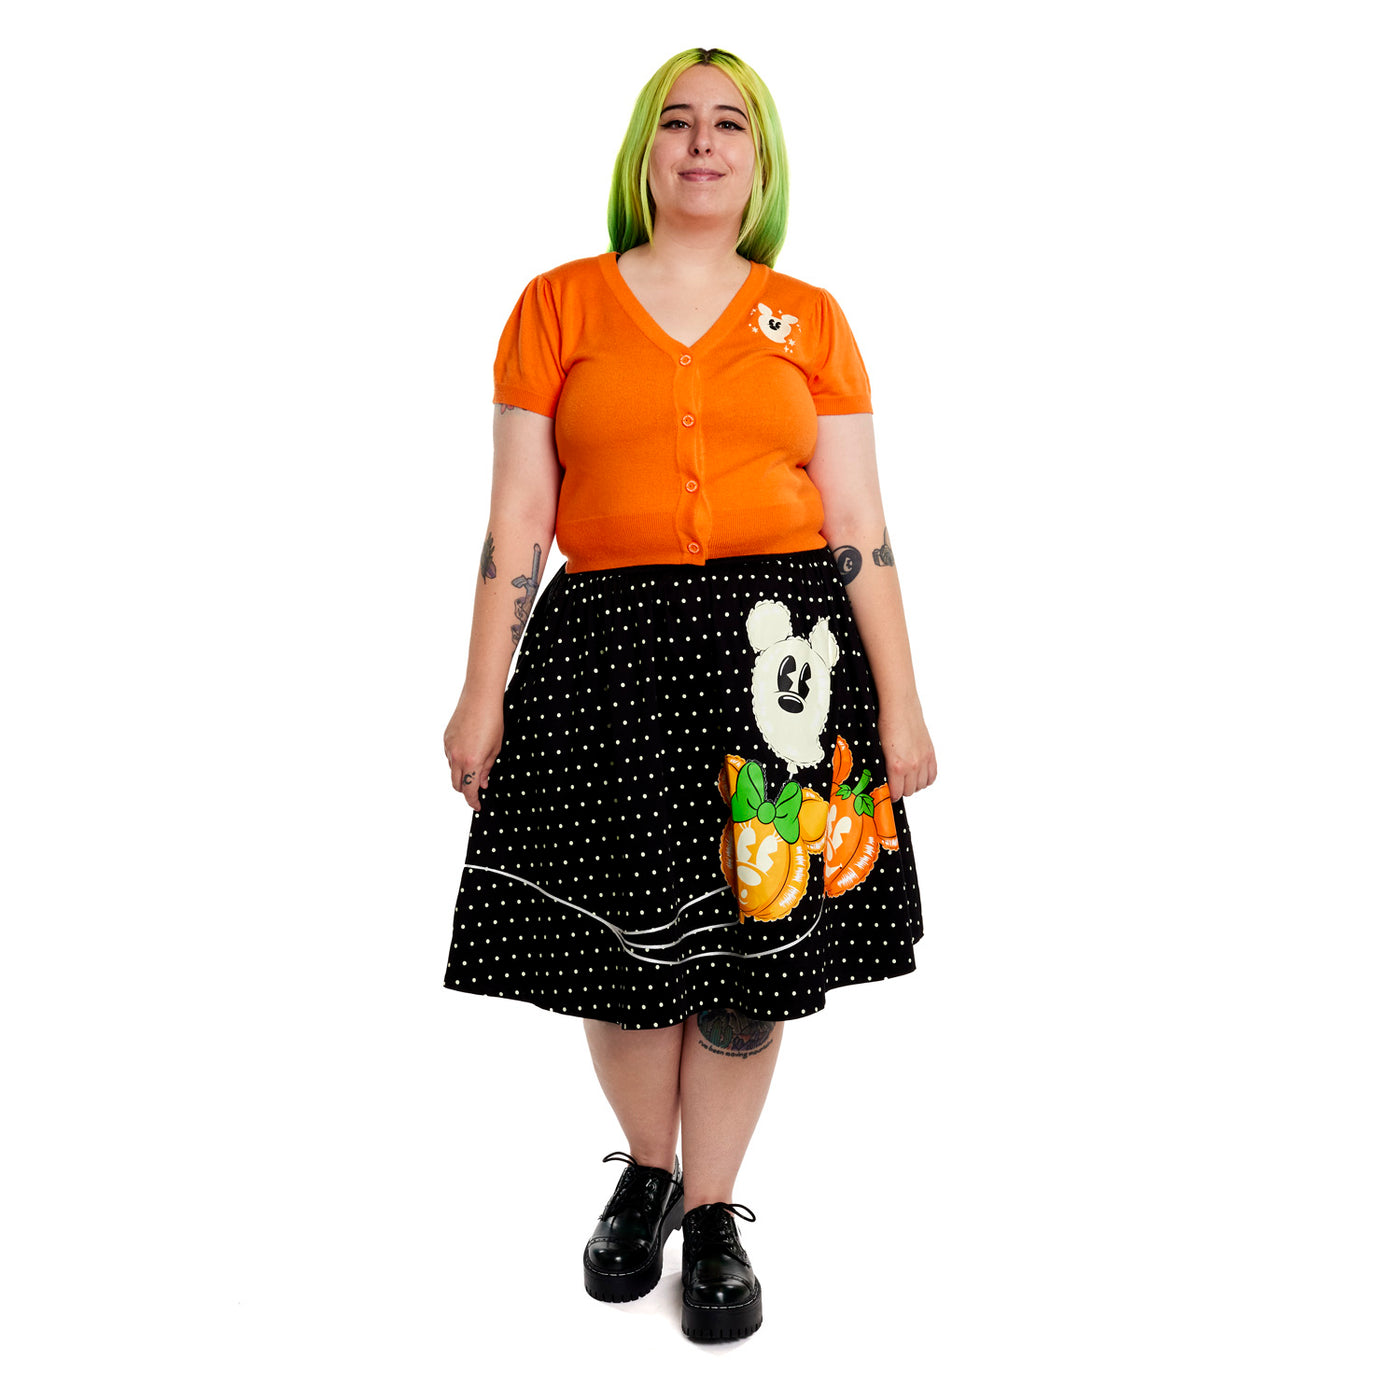 Stitch Shoppe by Loungefly Disney Spooky Balloons "Sandy" Skirt